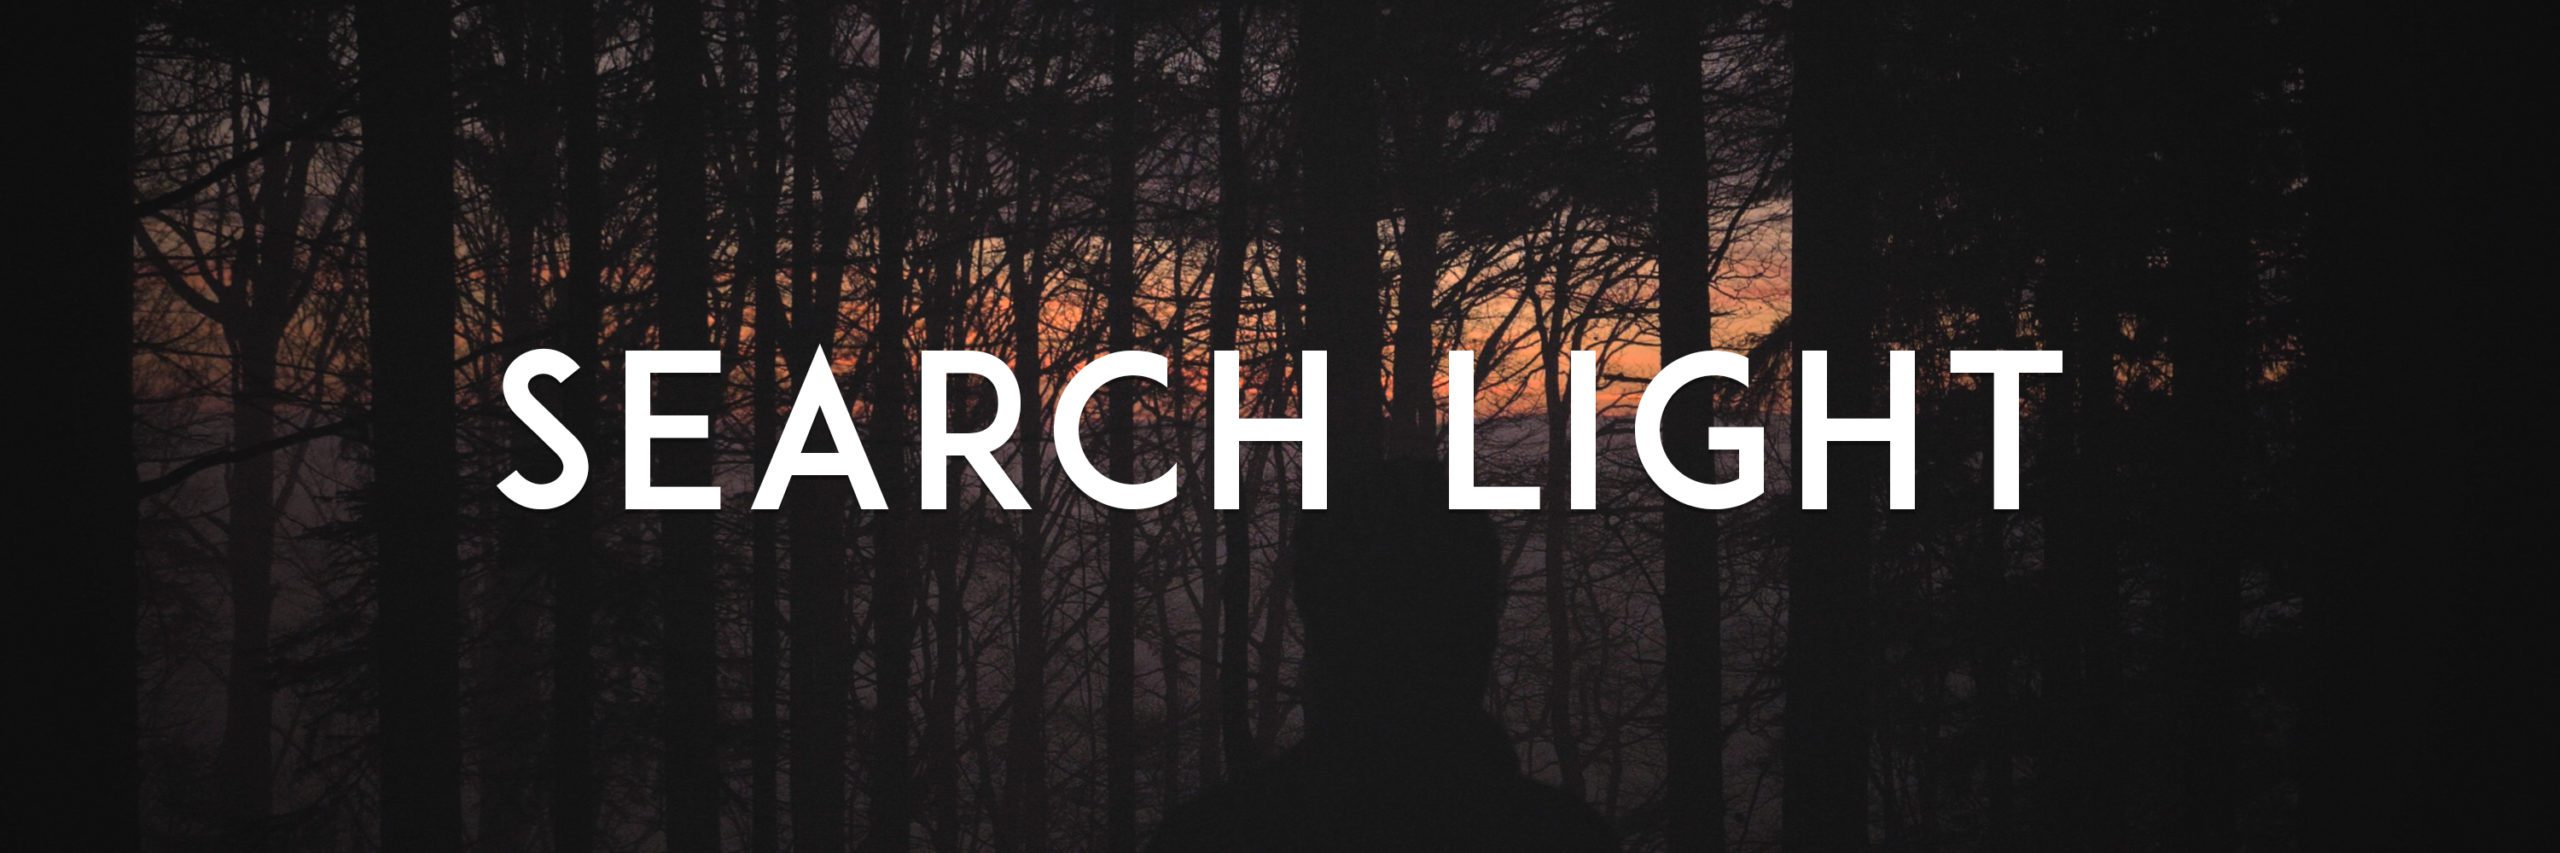 Chronique: Search Light